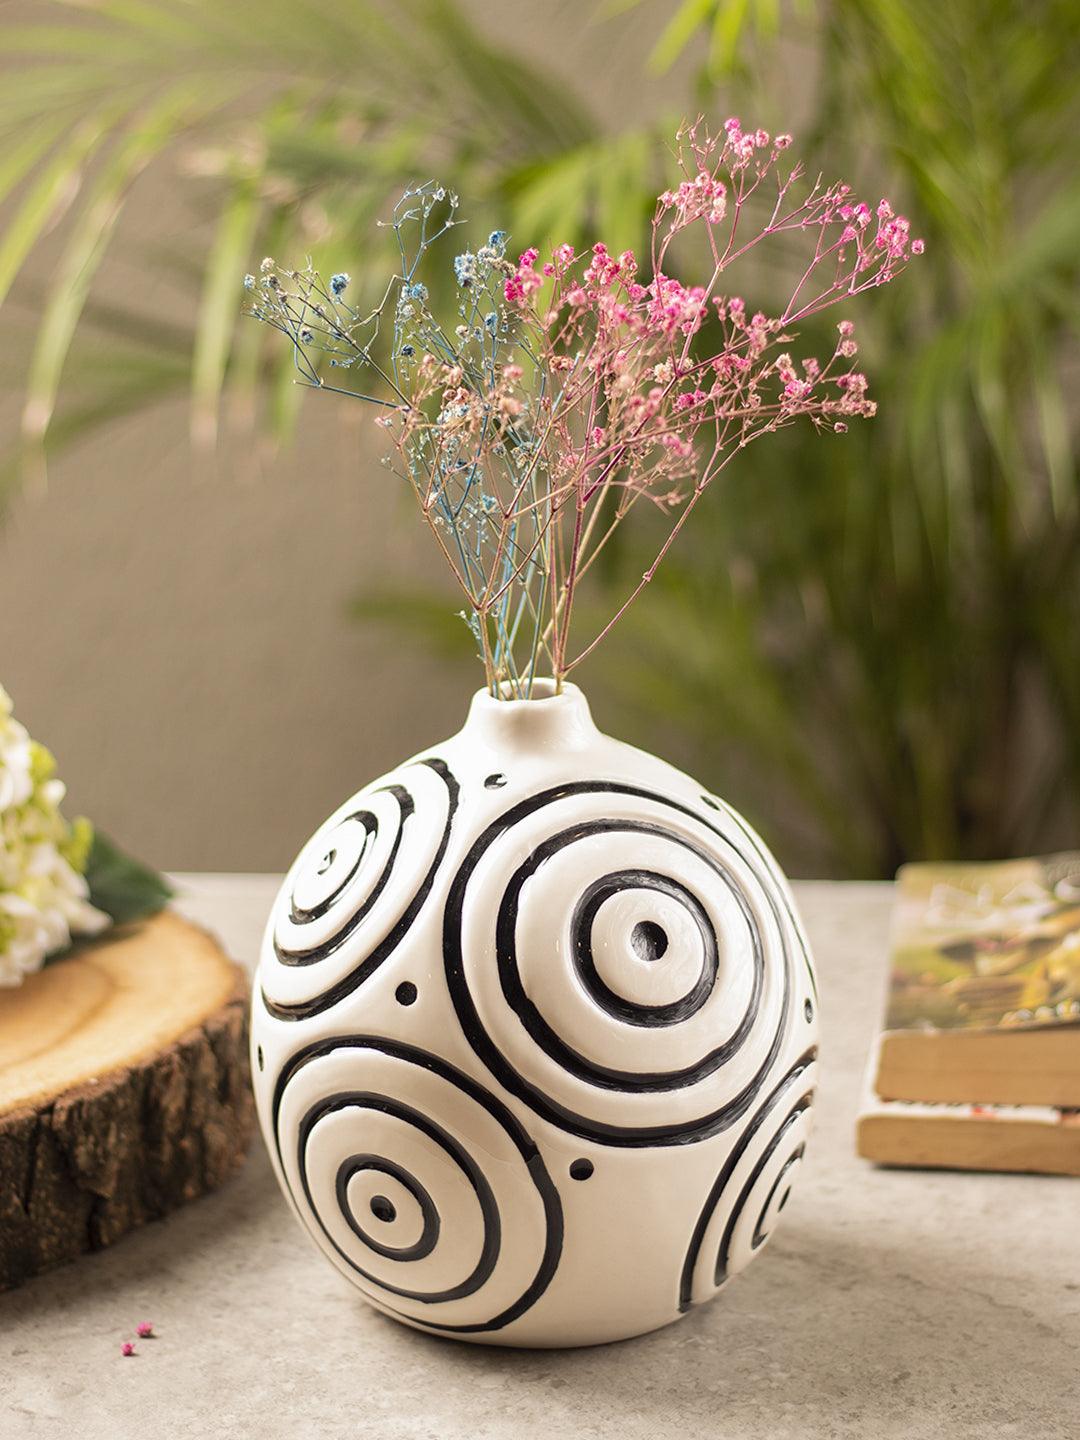 Buy Black & White Ceramic Round Vase - Cuircular Pattern, Flower